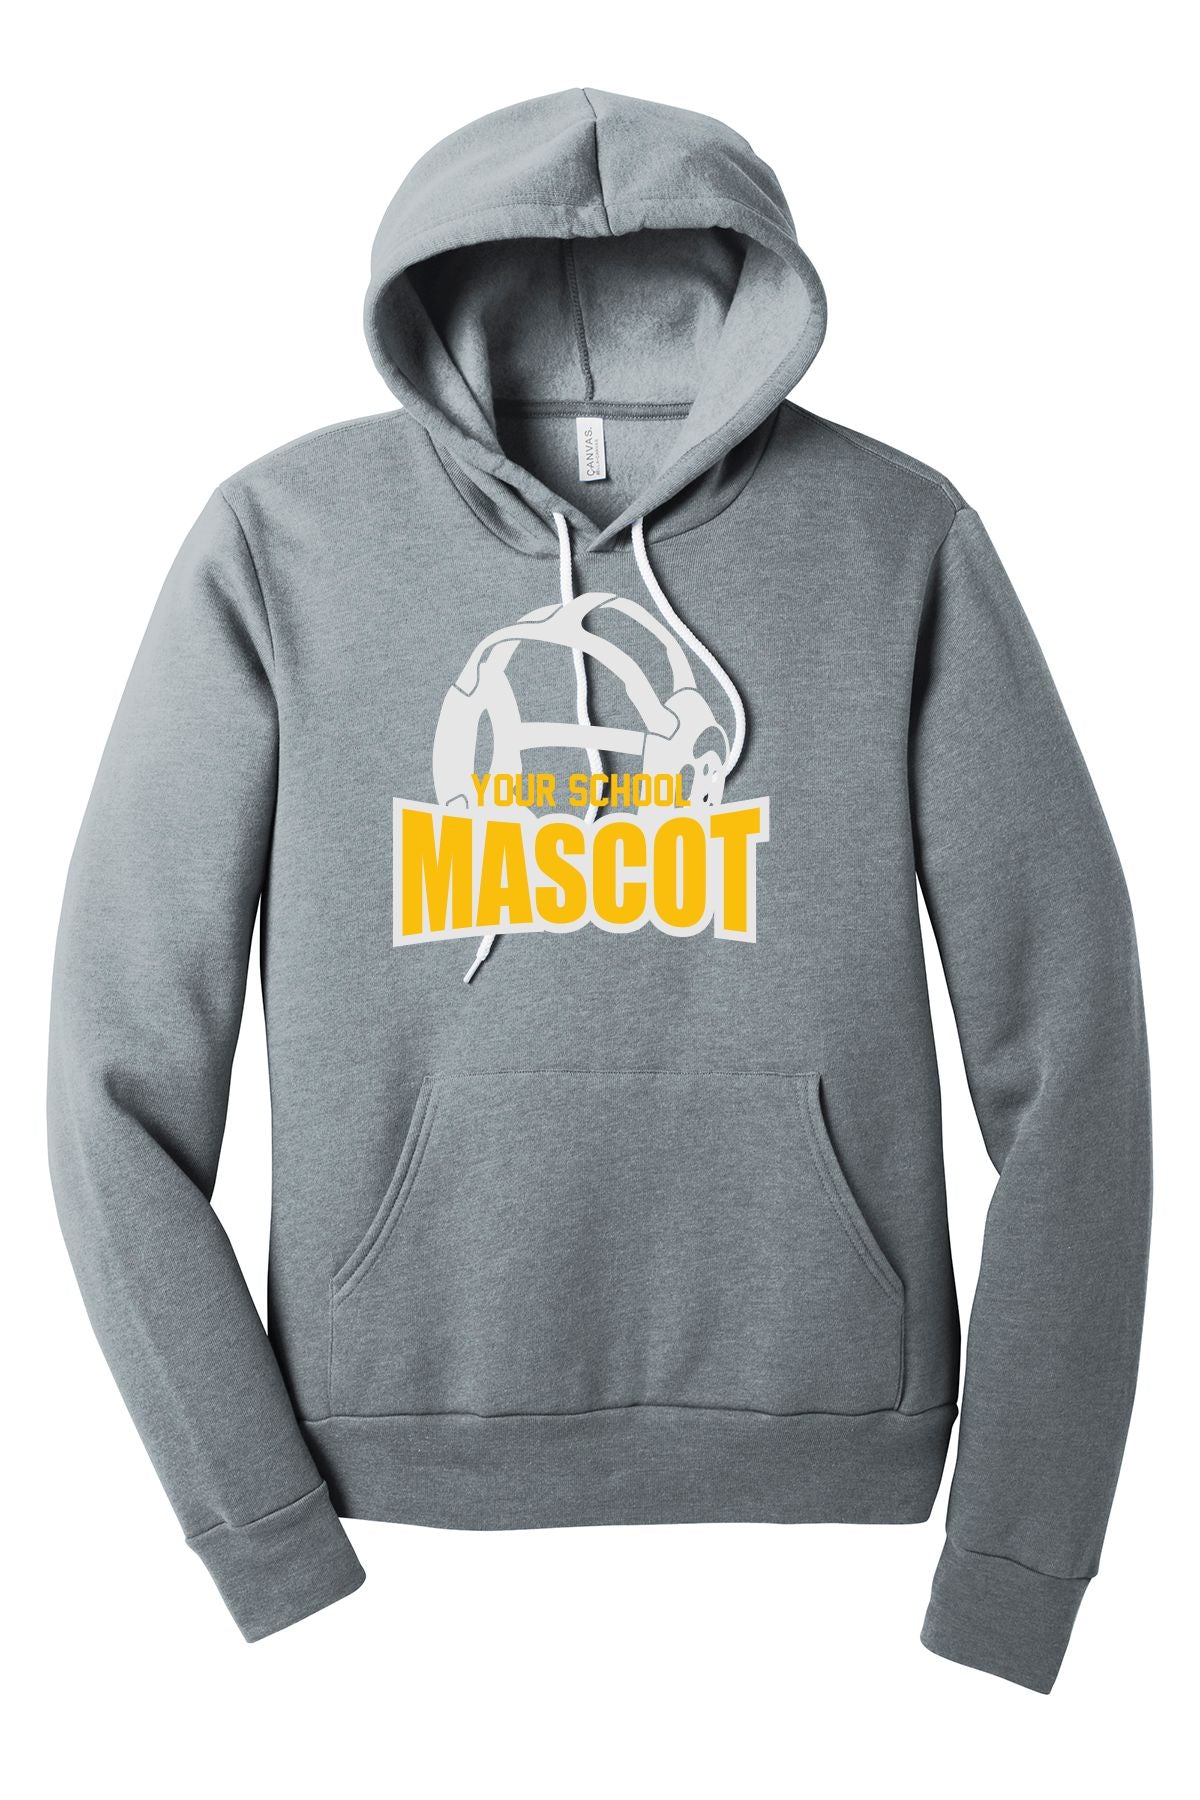 All Schools Mascot Wrestling Hooded Sweatshirt